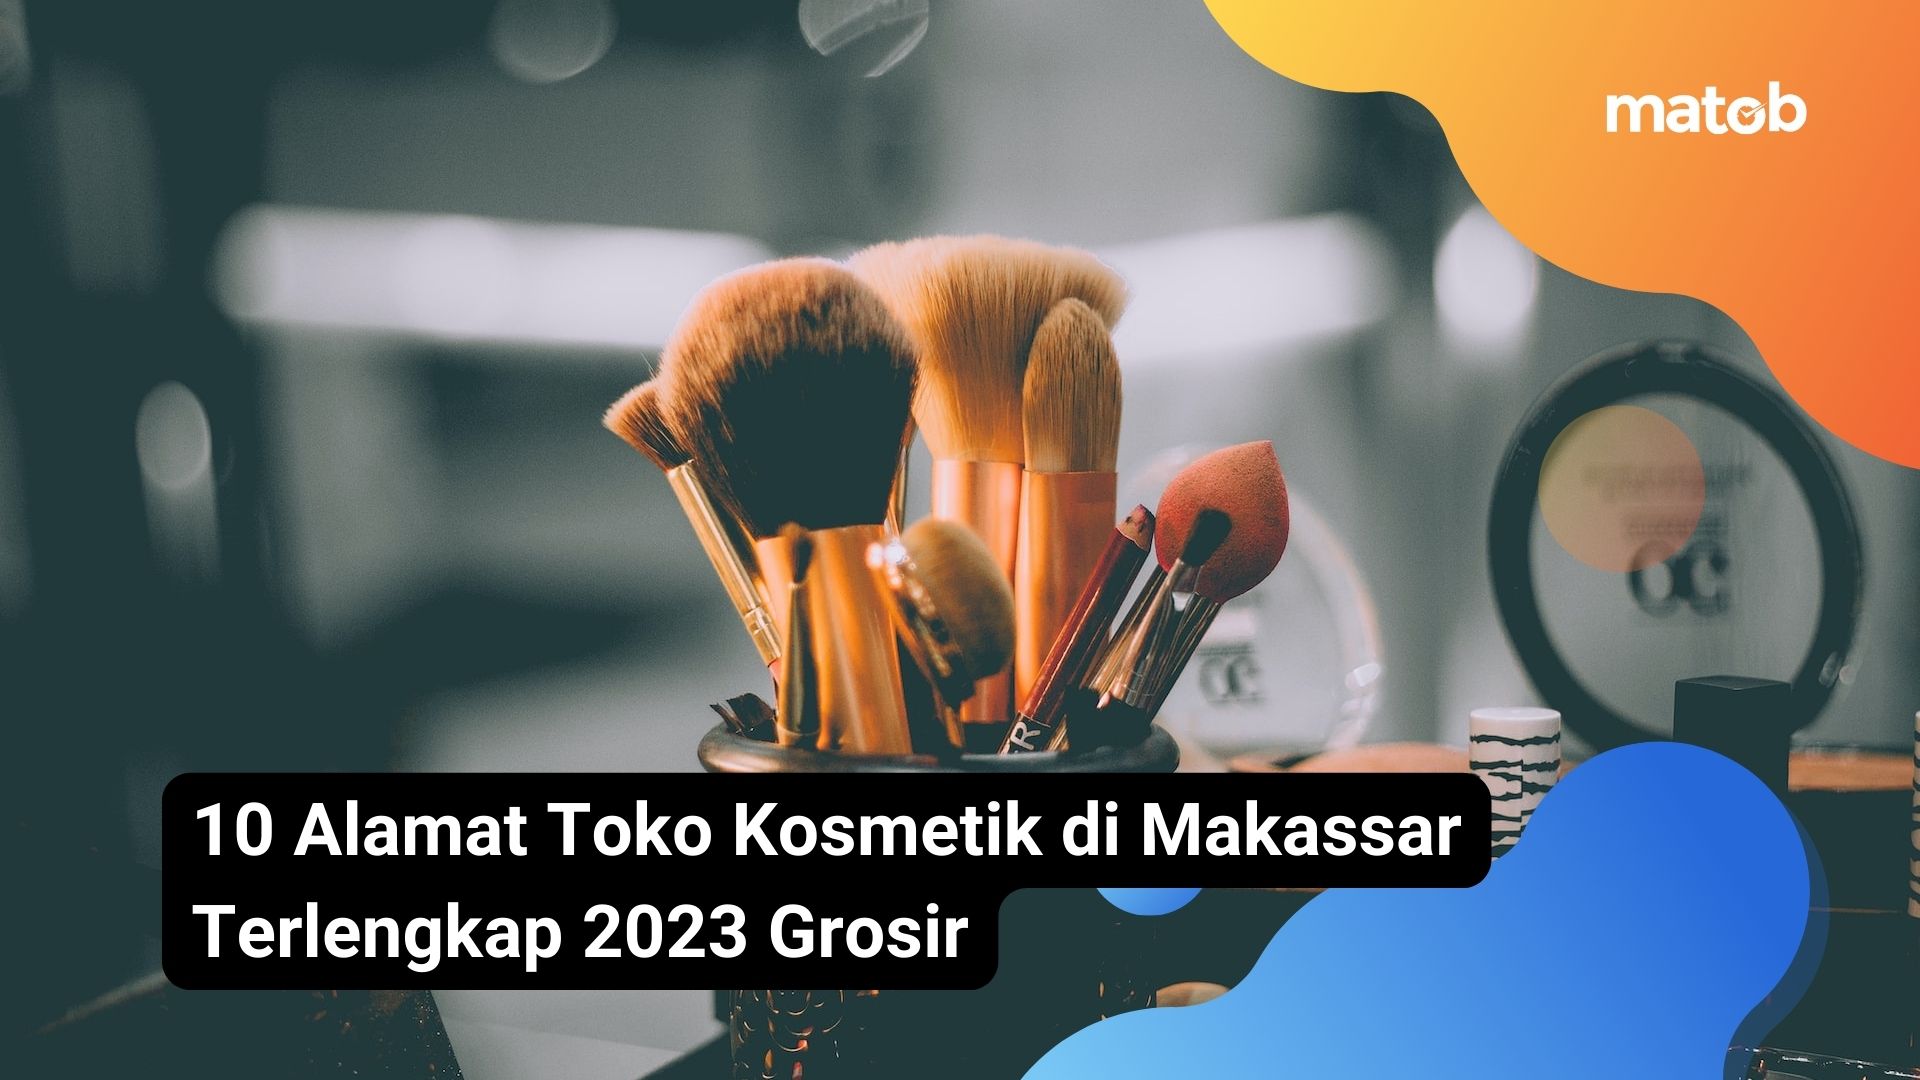 10 Alamat Toko Kosmetik di Makassar Terlengkap 2023 Grosir